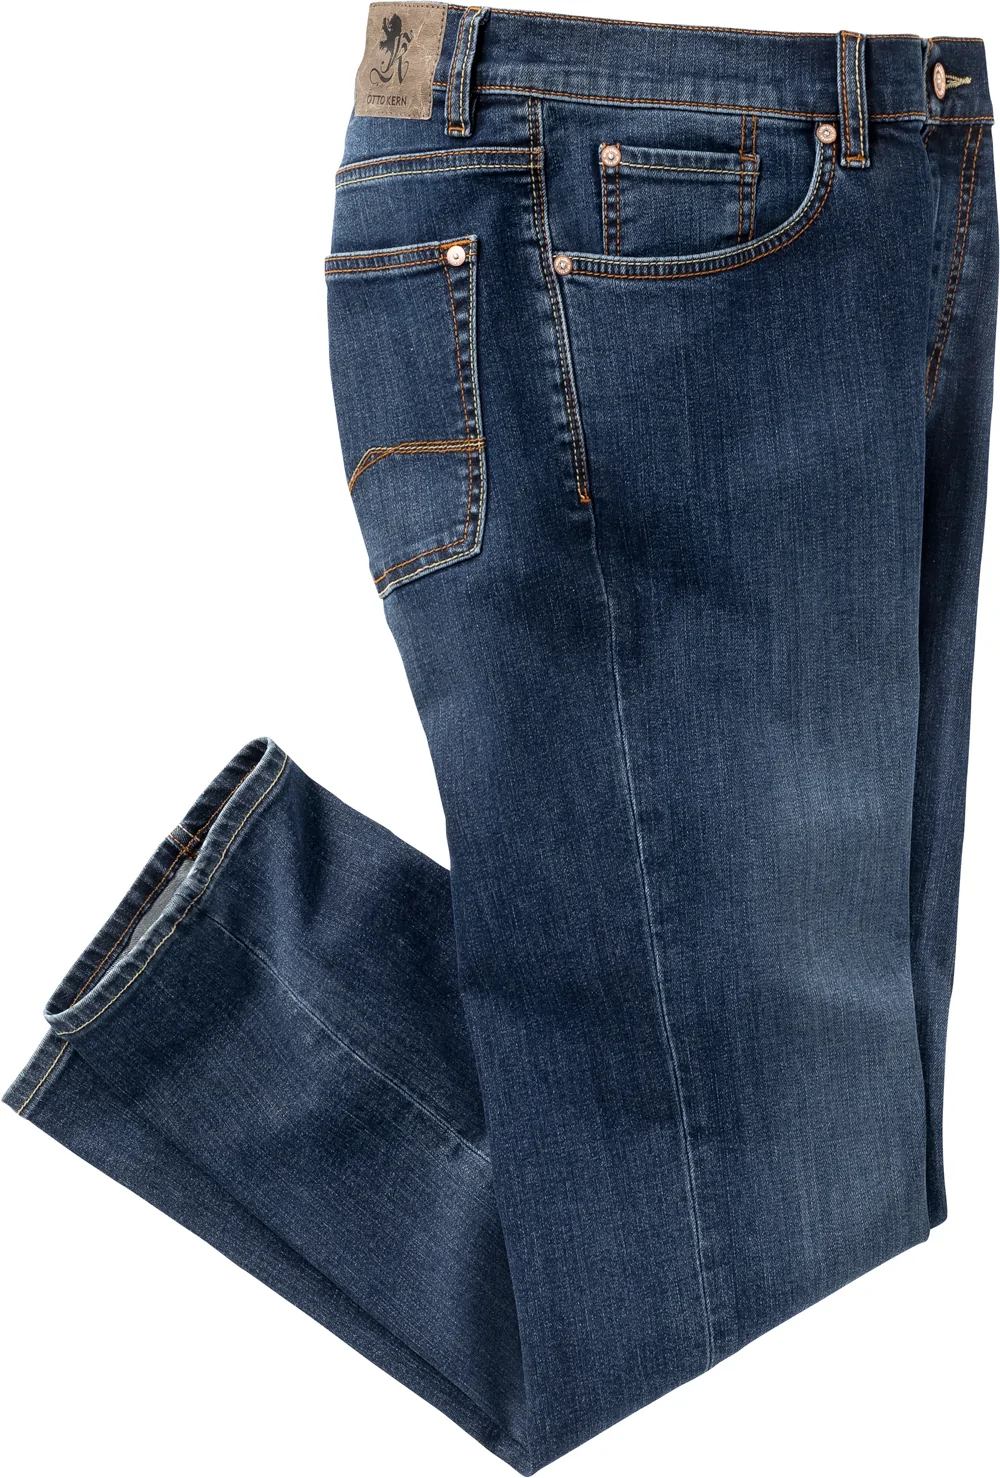 Otto Kern Denimstretch-Jeans